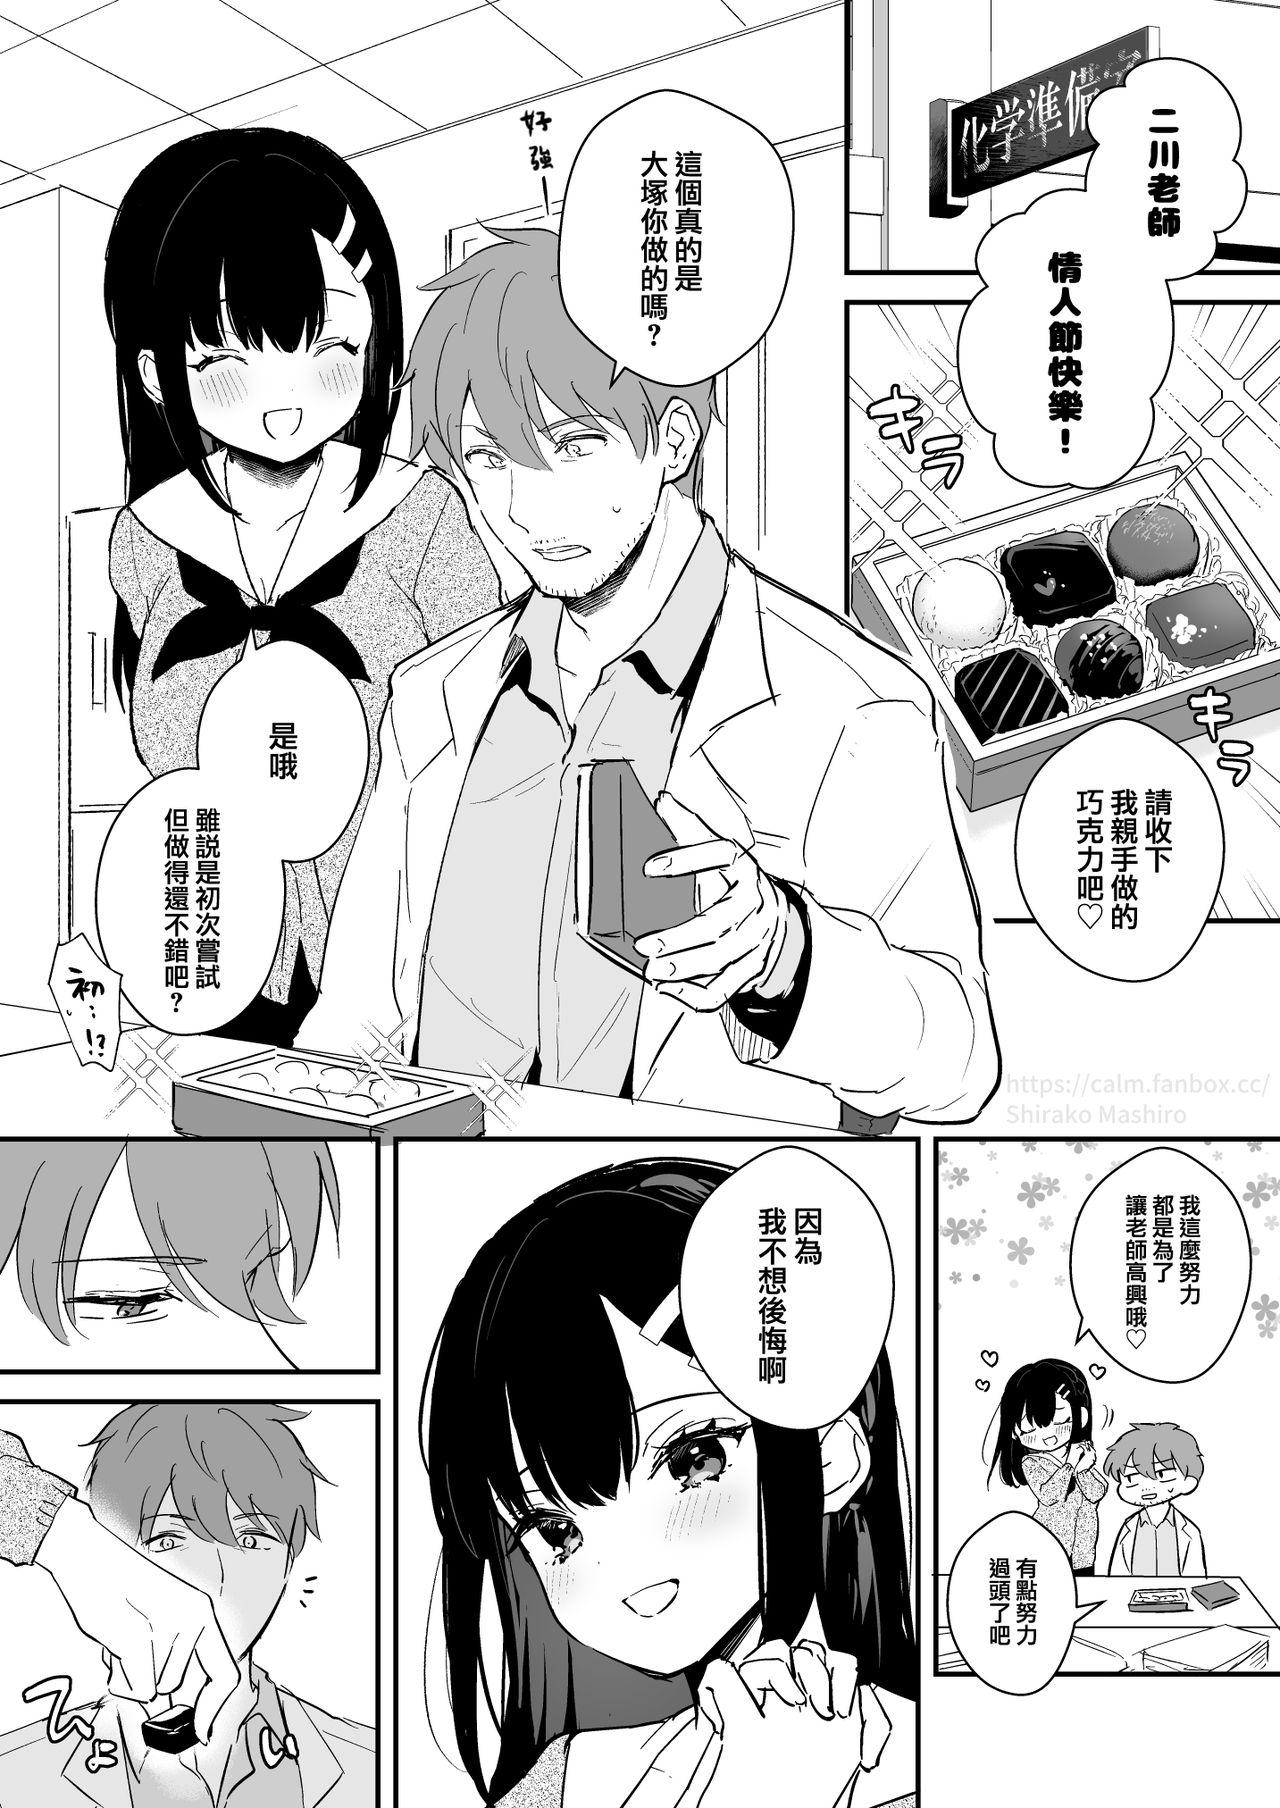 Coroa JK Miyako no Valentine Manga Sologirl - Page 2